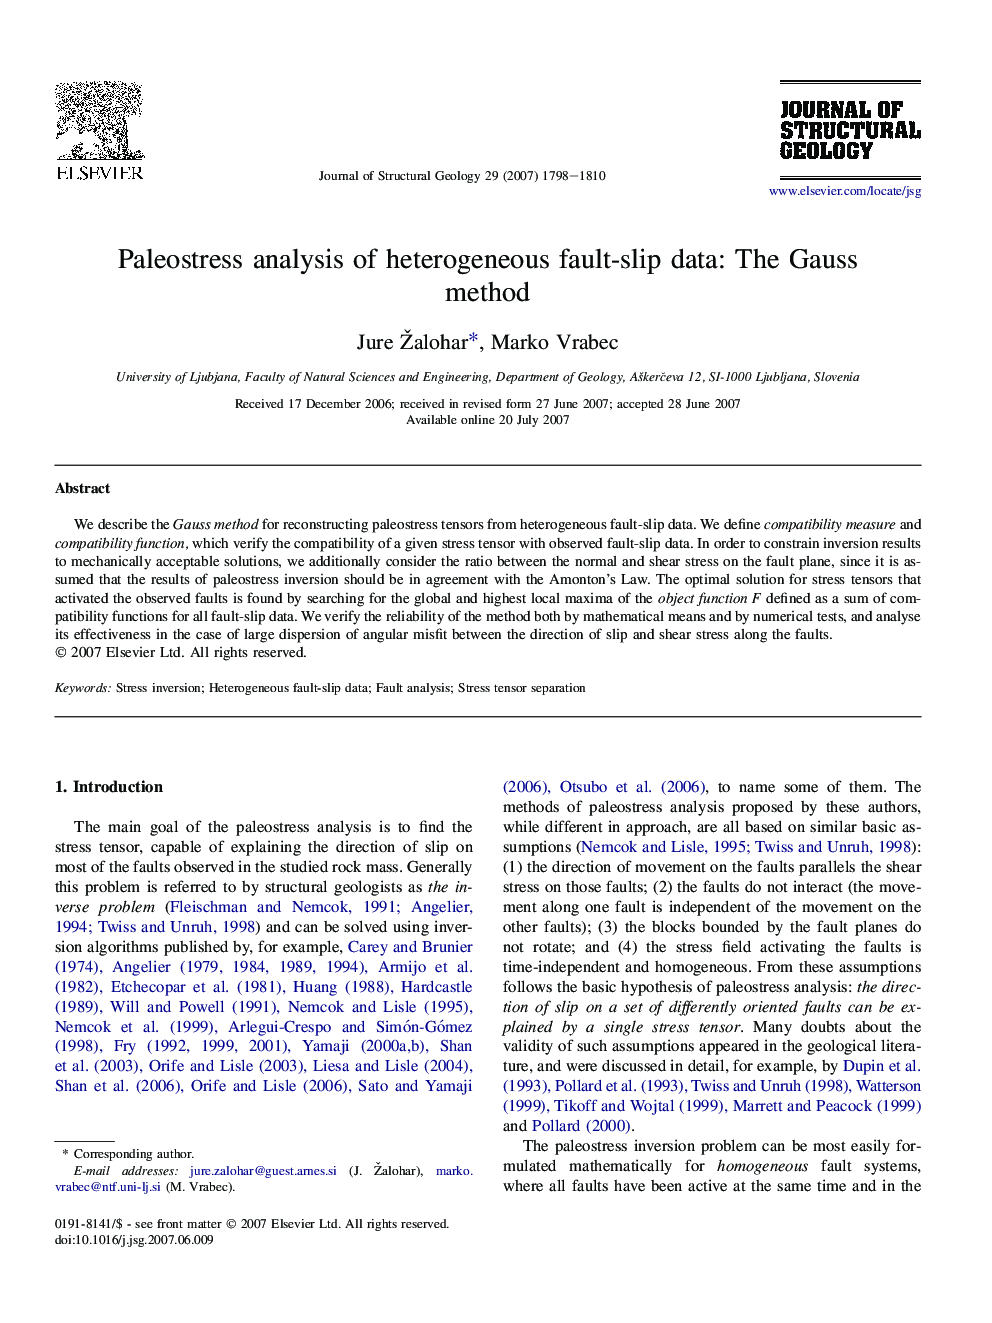 Paleostress analysis of heterogeneous fault-slip data: The Gauss method